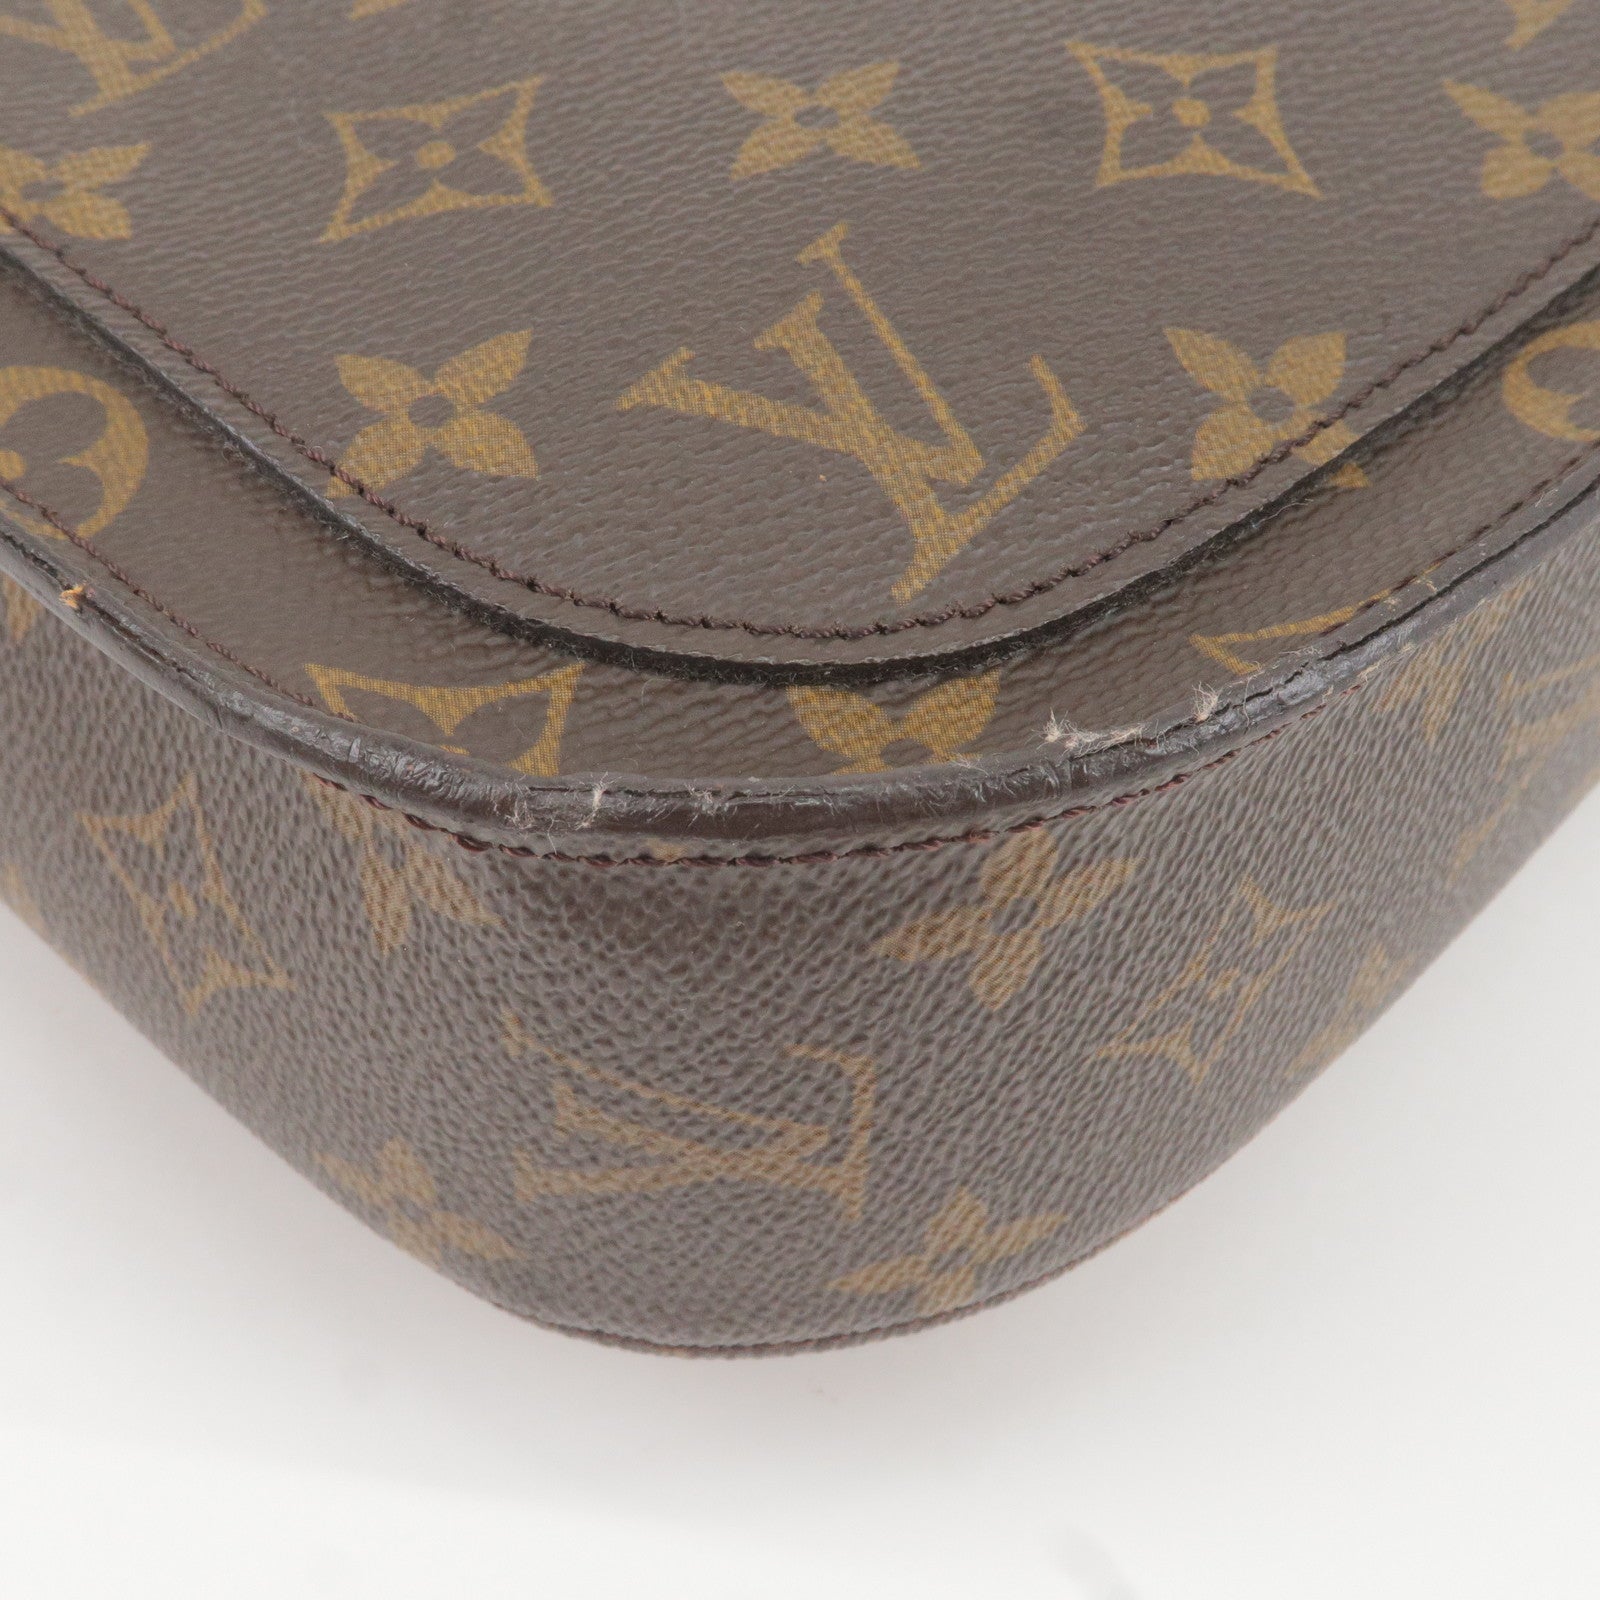 Louis Vuitton 2020 pre-owned Maida Hobo Shoulder Bag - Farfetch